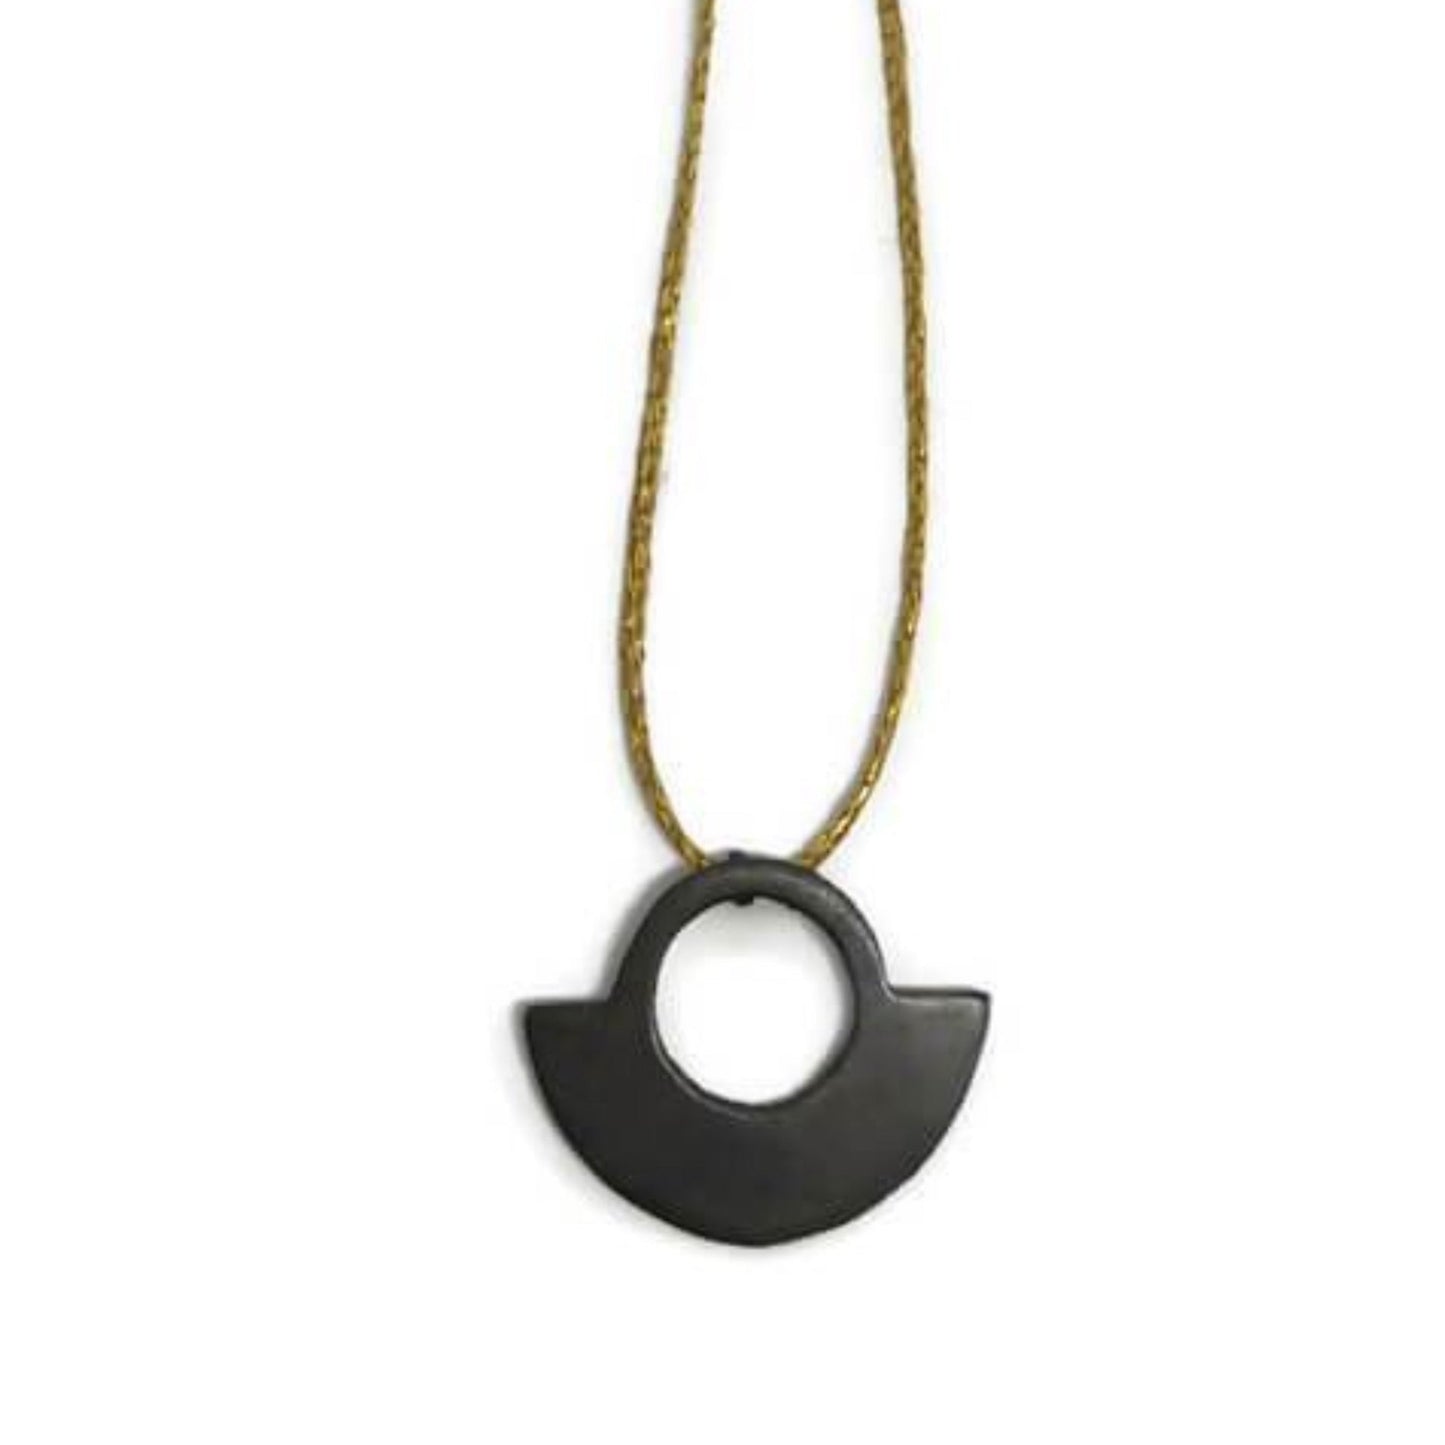 Oxidised brass necklace | Black Balancing Necklace - CURIUDO